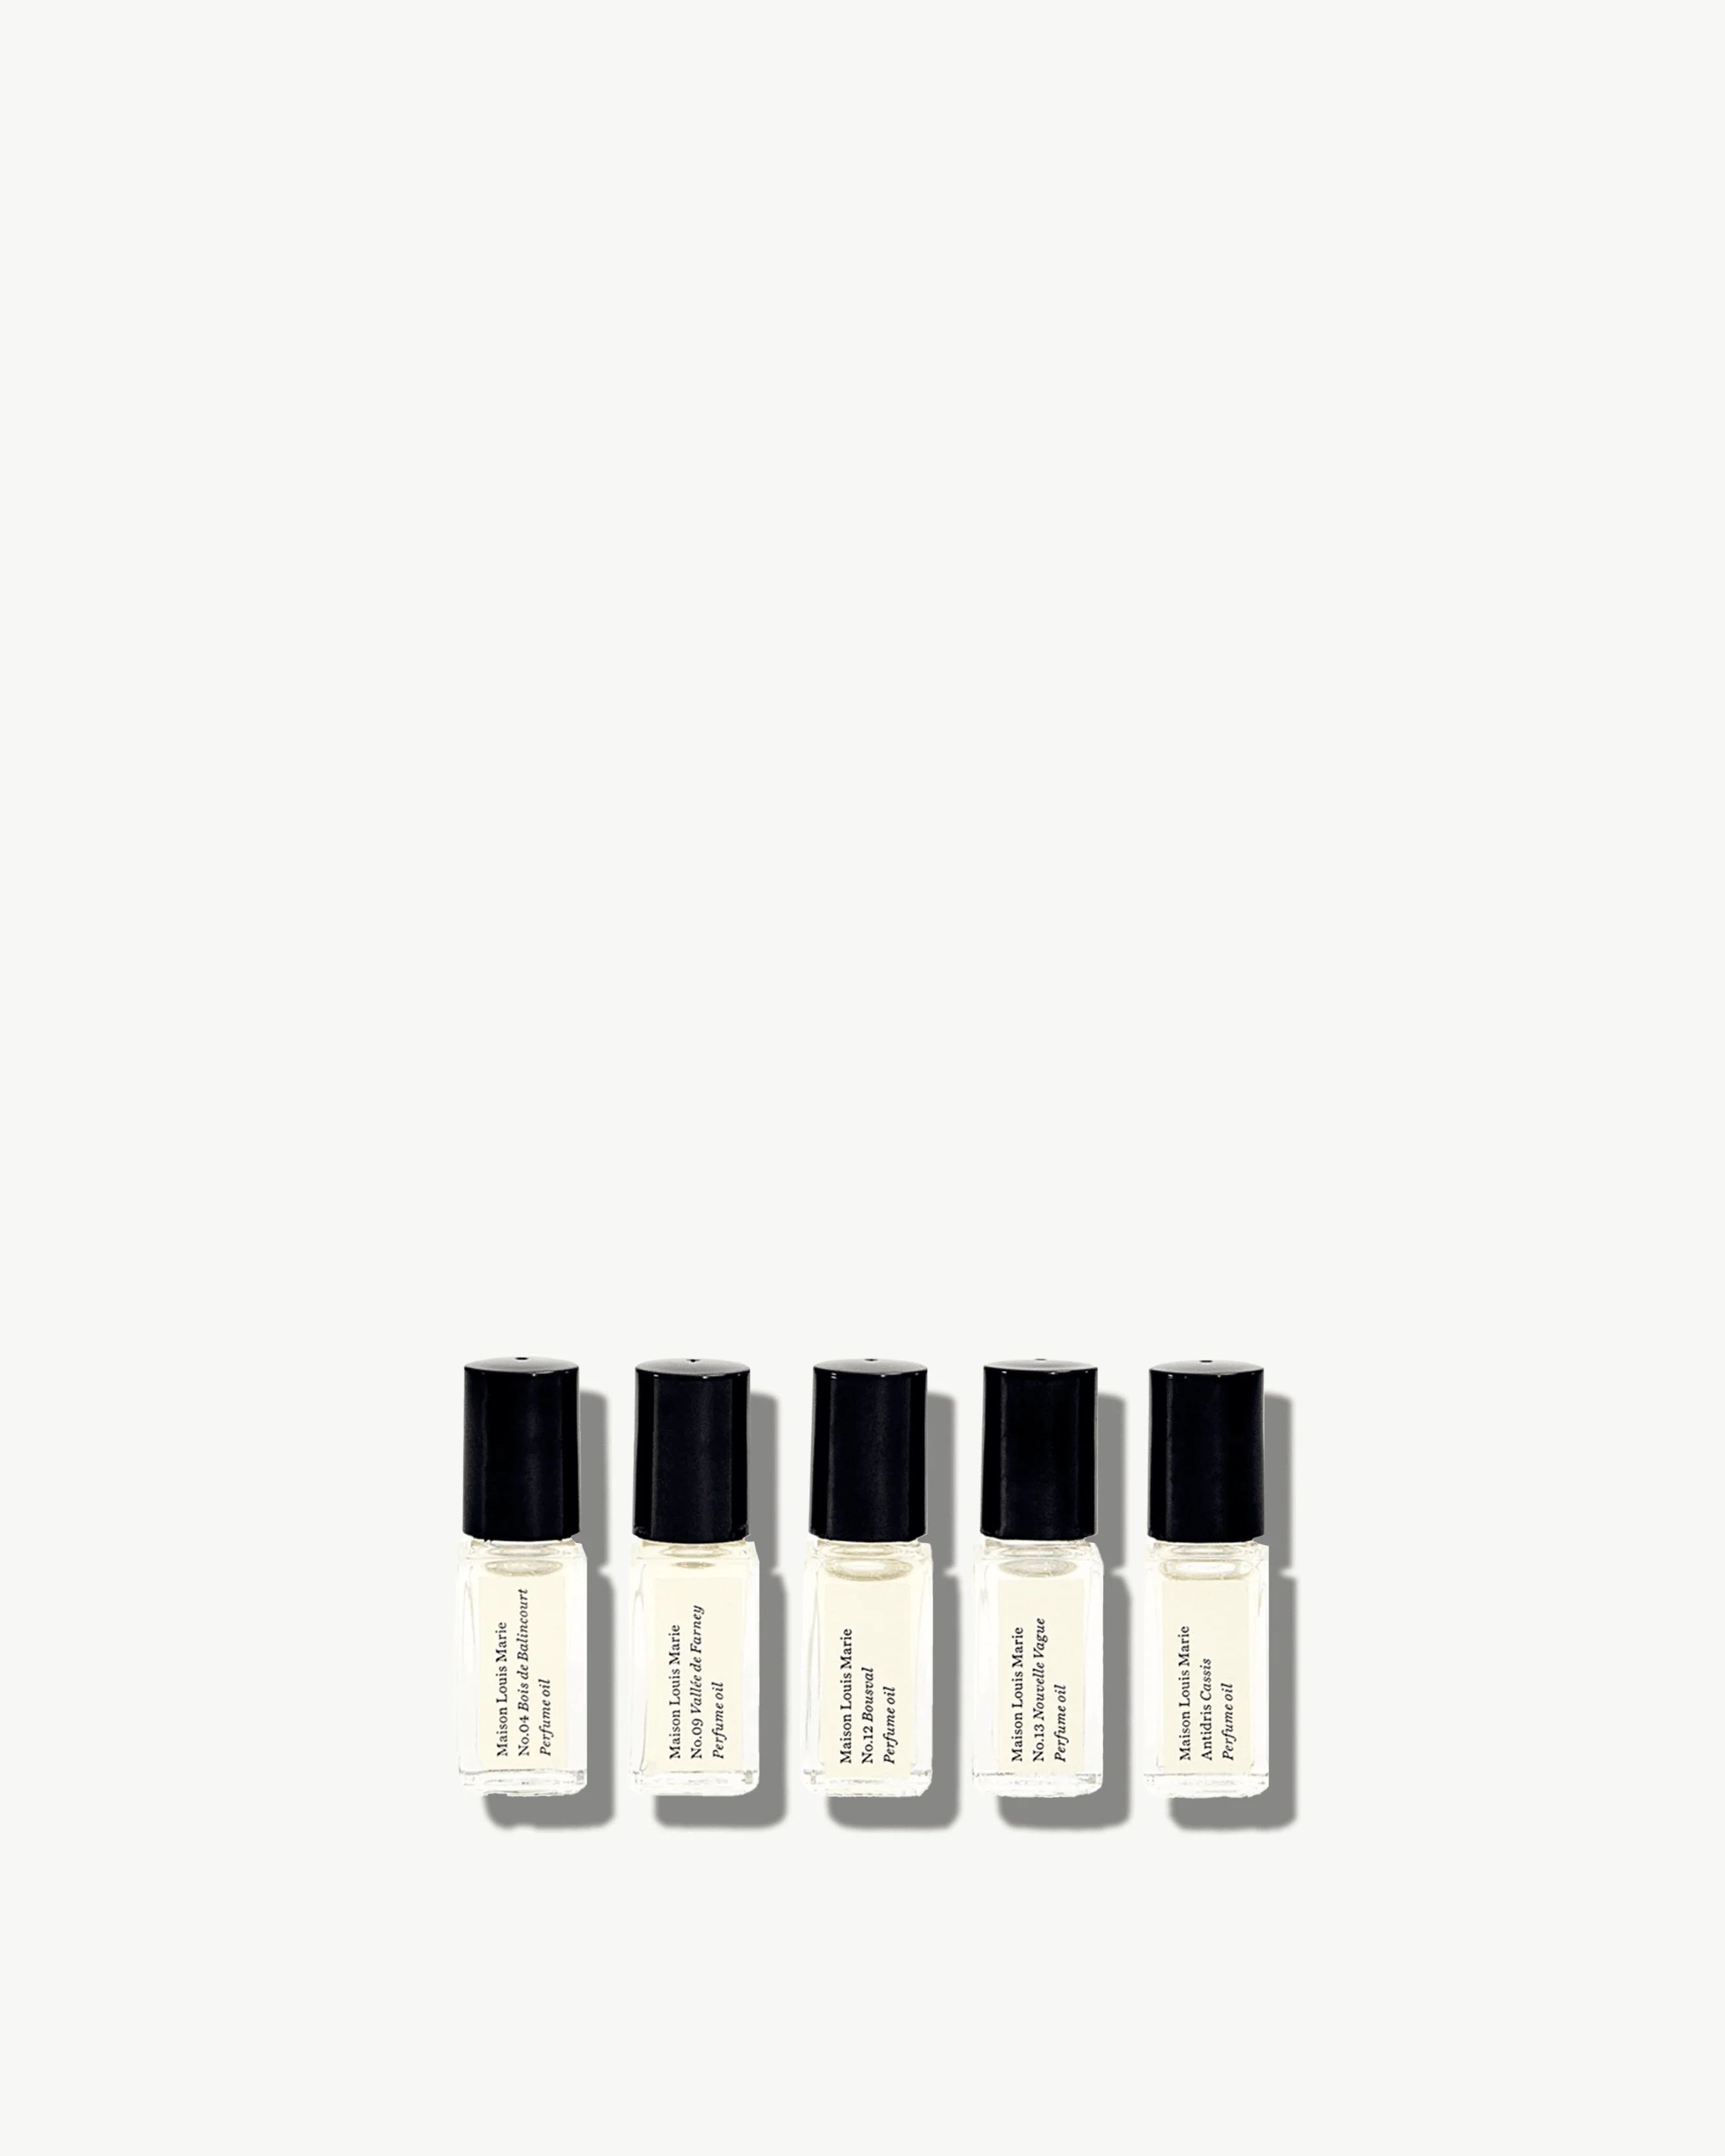 Maison Louis Marie Perfume Oil Discovery Set - Clean Fragrance Set | Credo Beauty